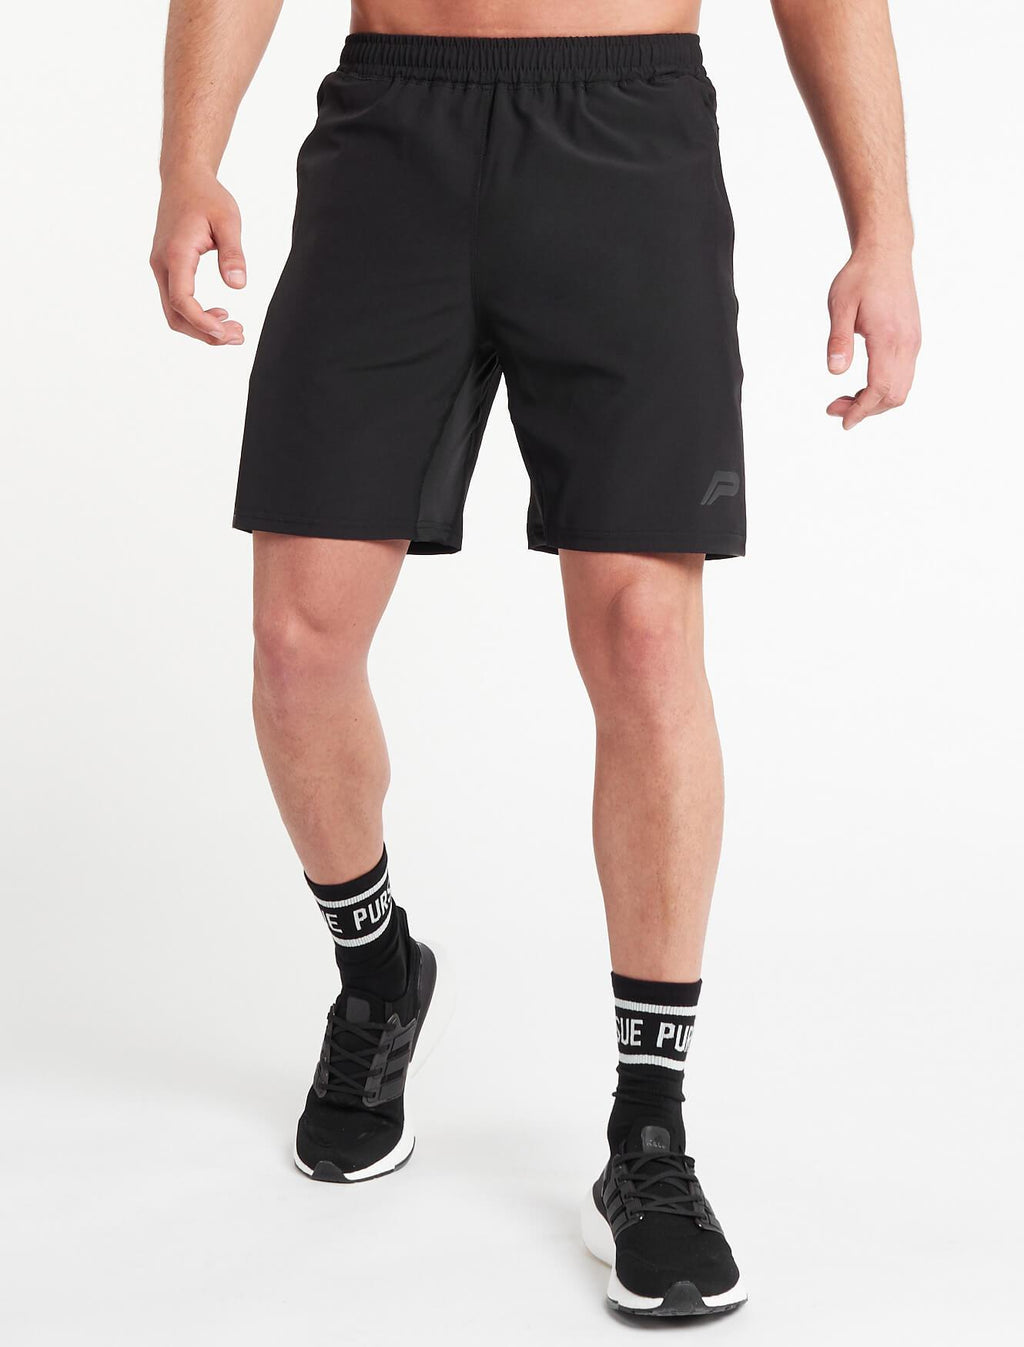 products/mens-breatheasyr-training-shorts-black.jpg